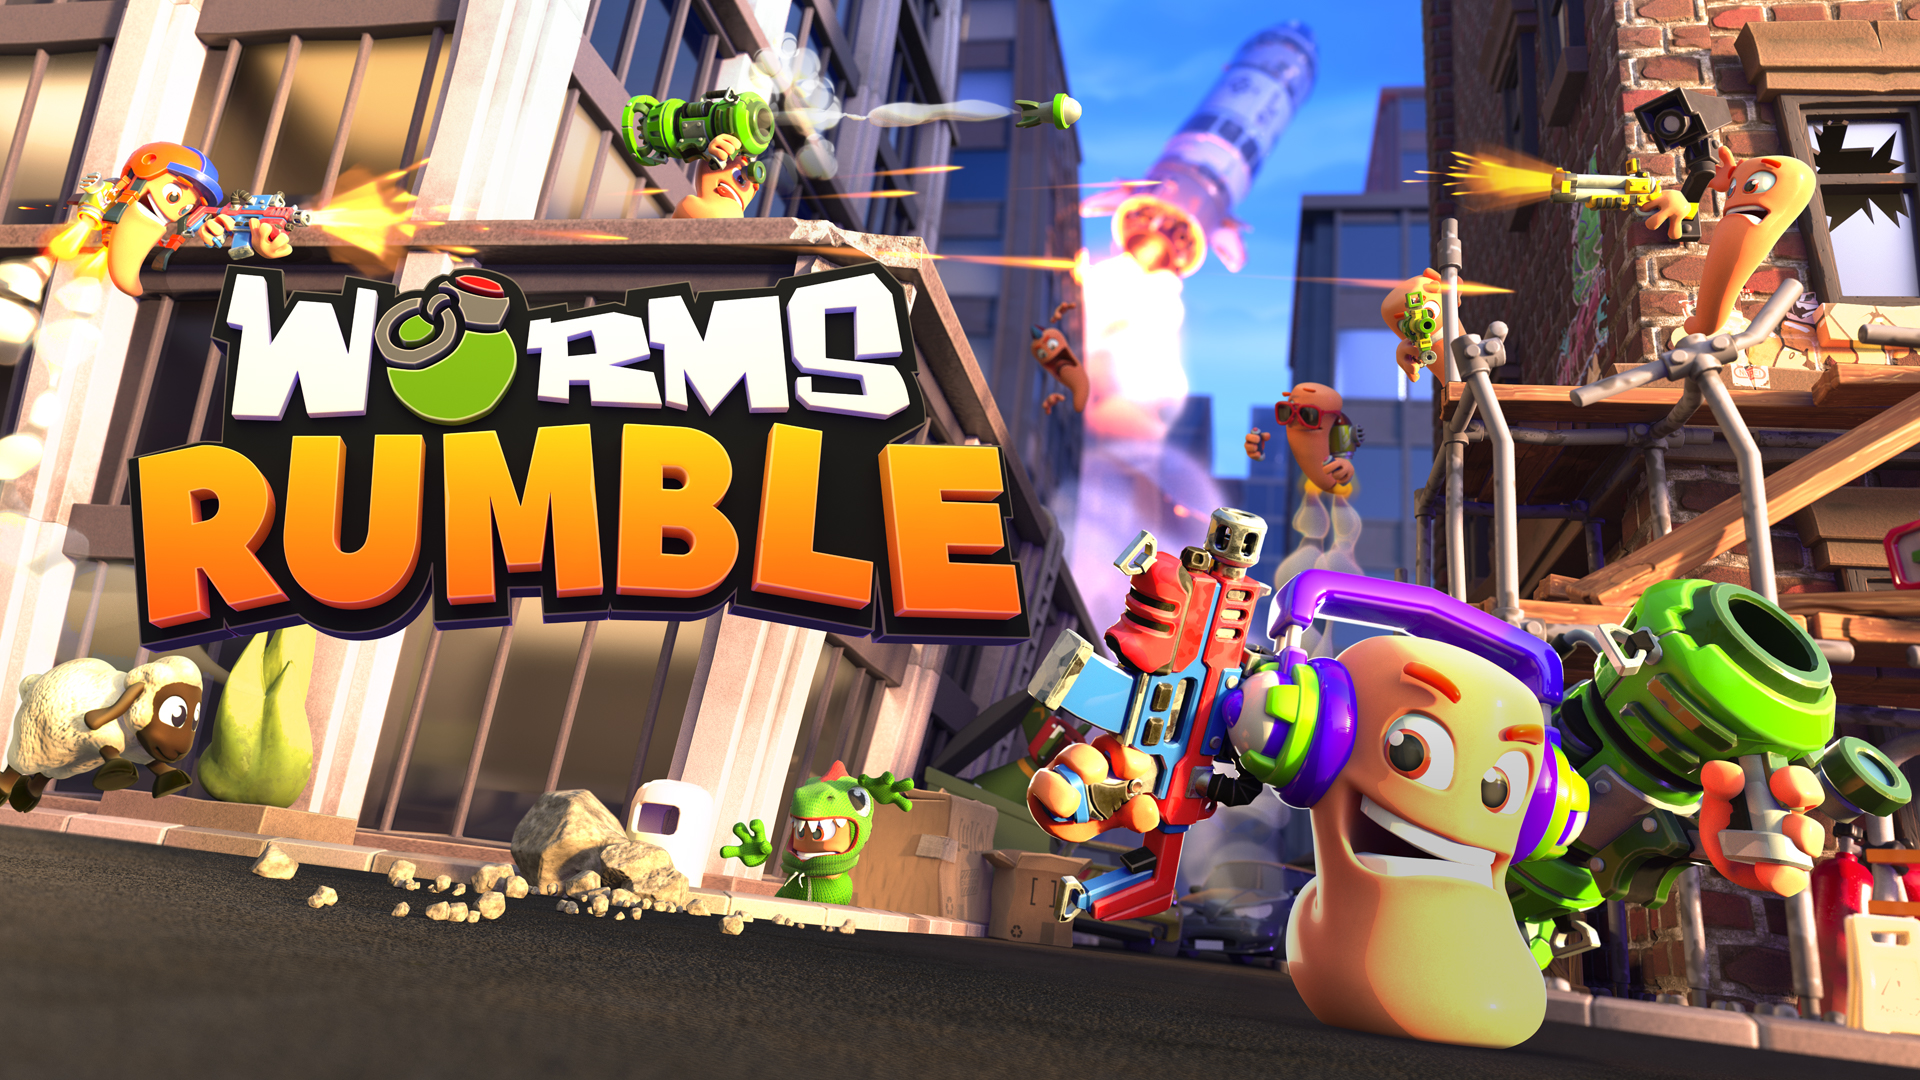 Worms Rumble Artwork Gaming